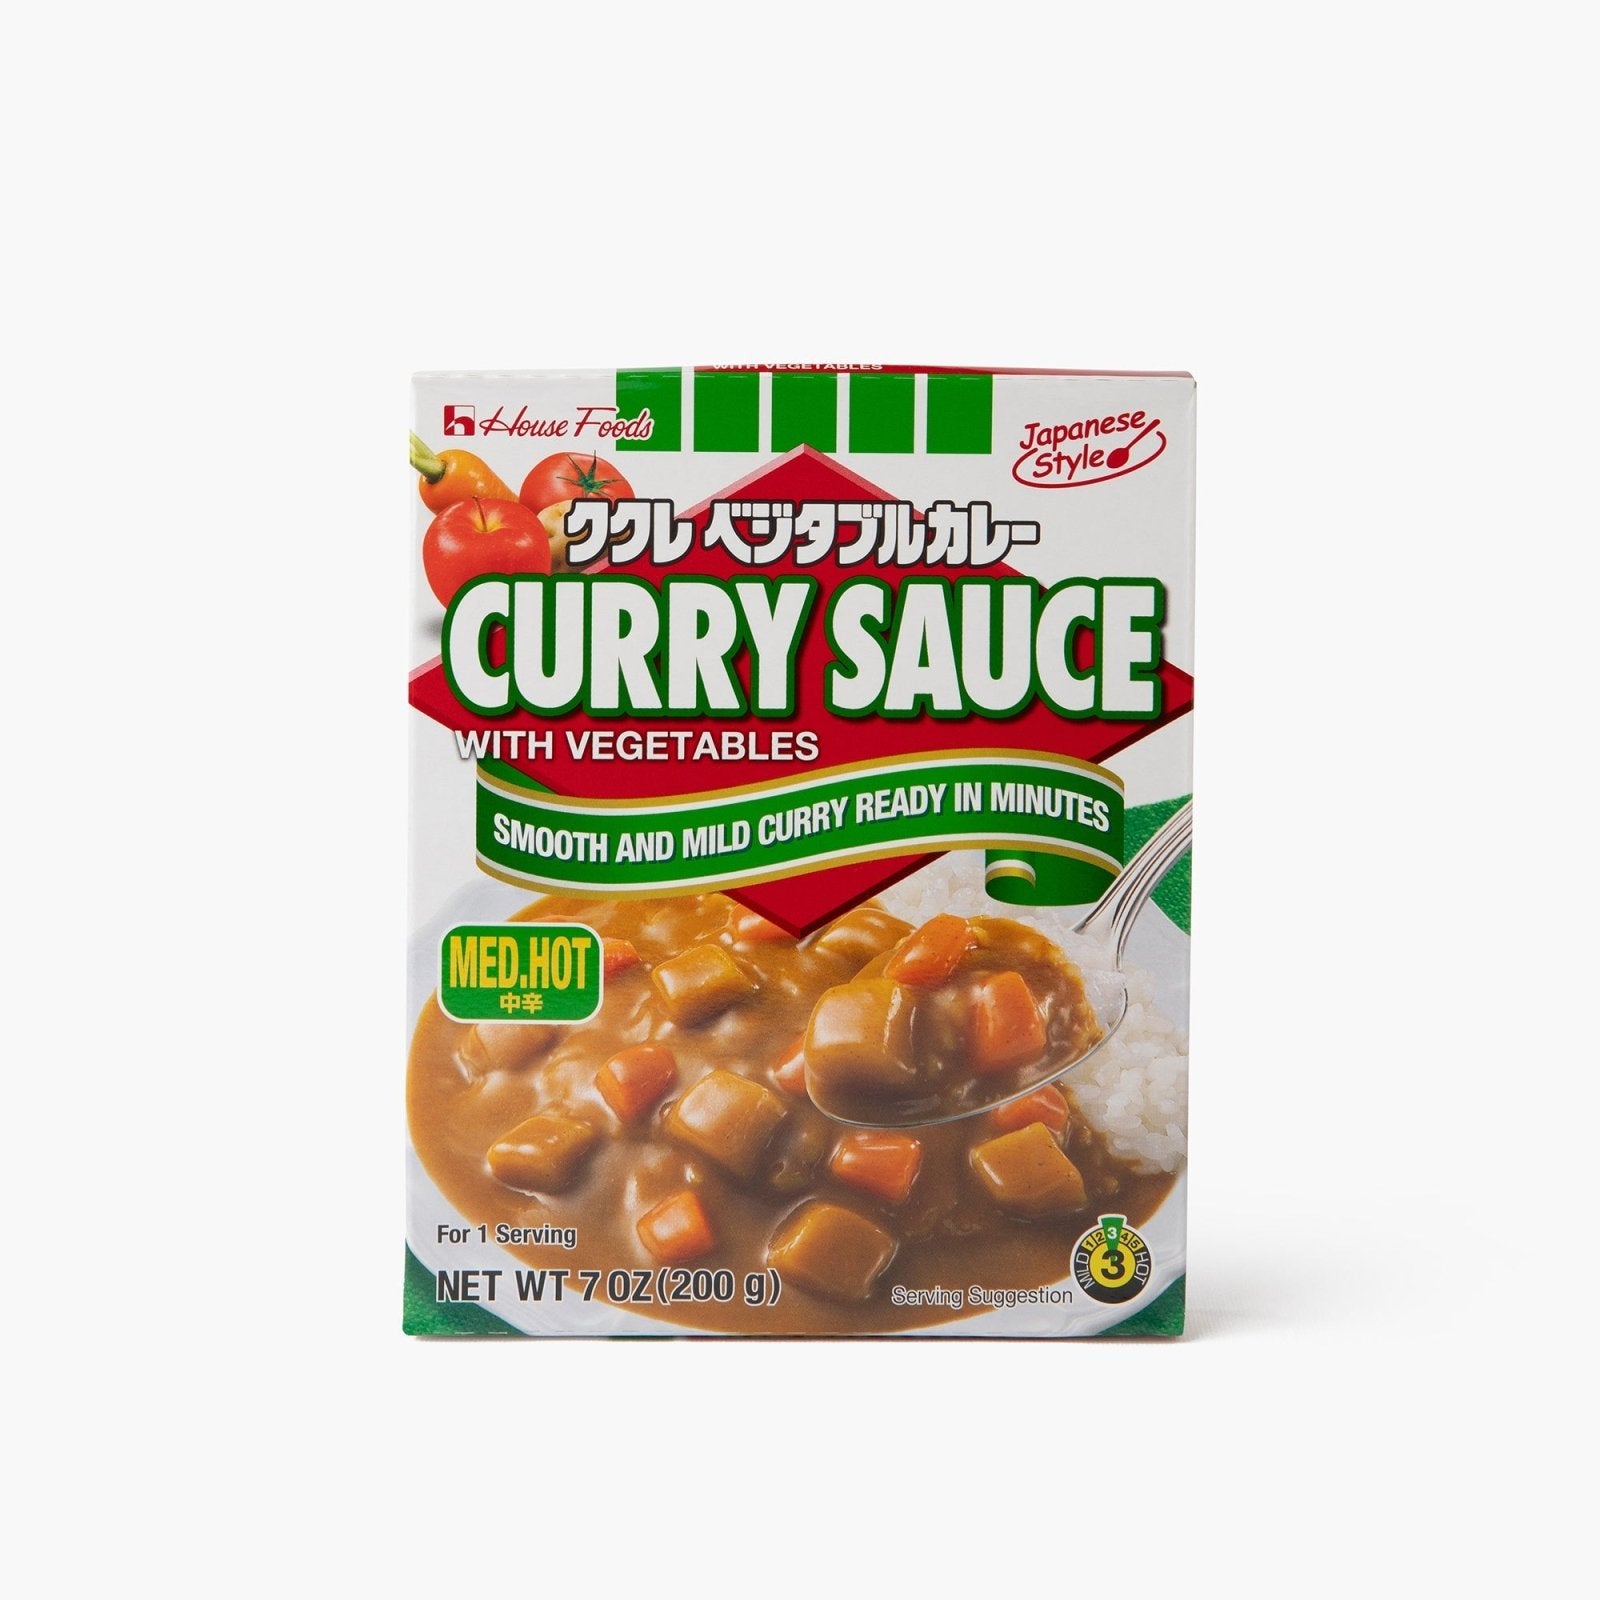 Sauce curry relevé (medium hot) avec légumes - 230g - House foods - iRASSHAi